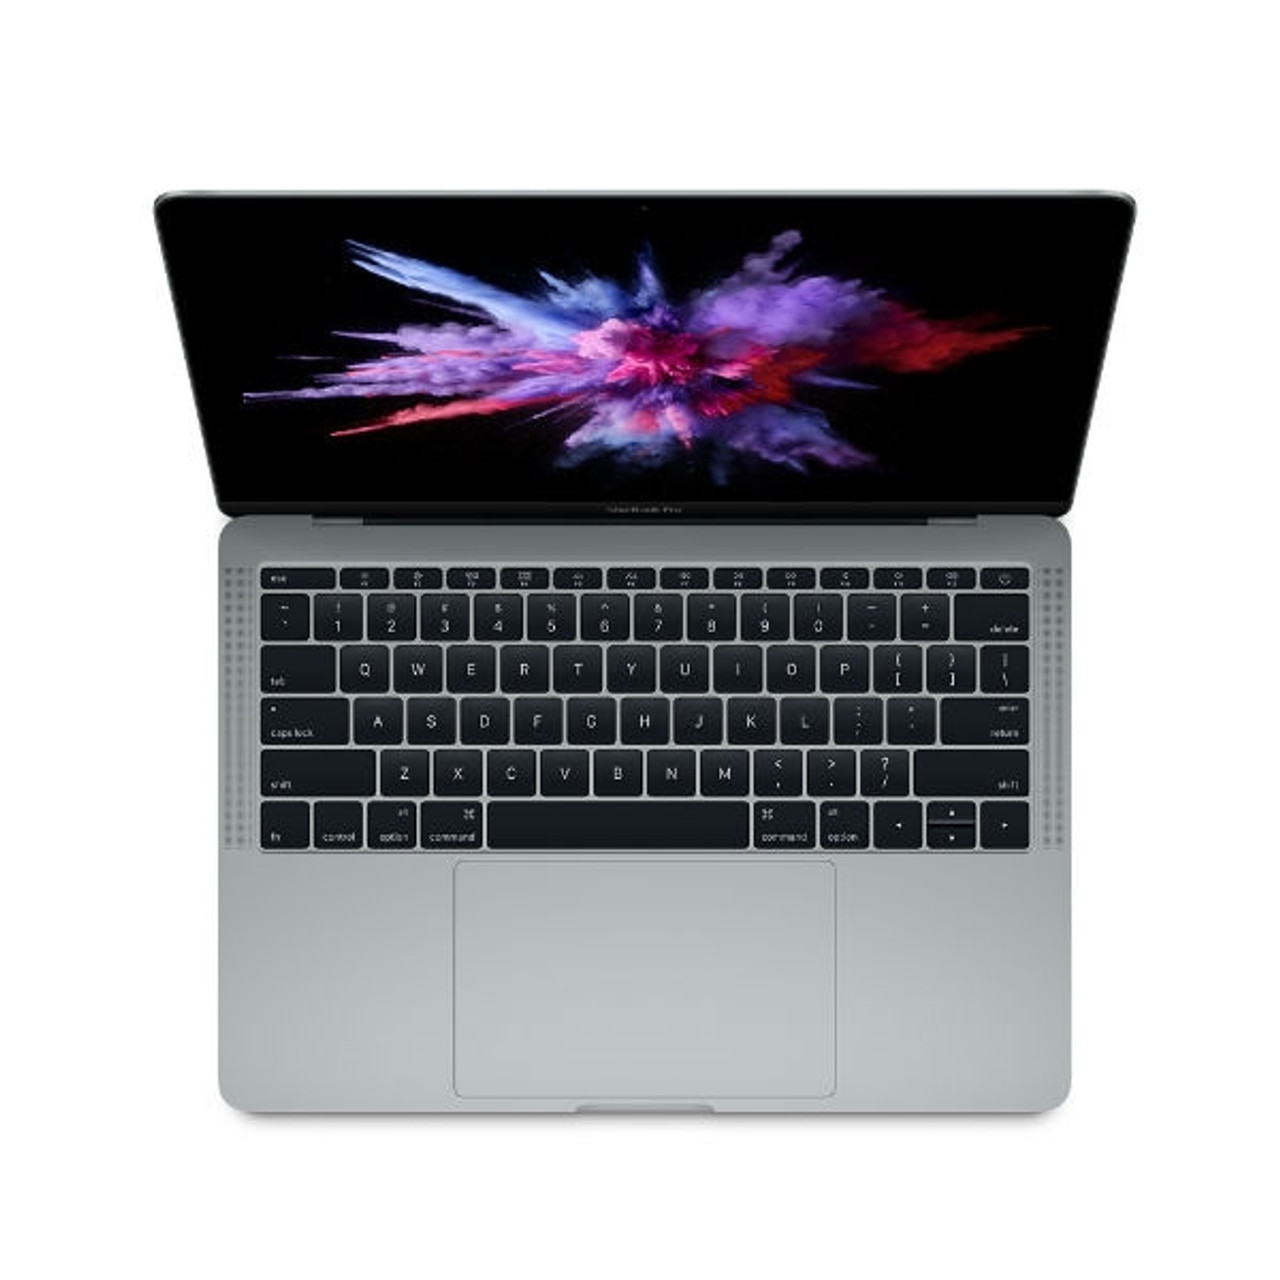 Fair Condition*: MacBook Pro 13